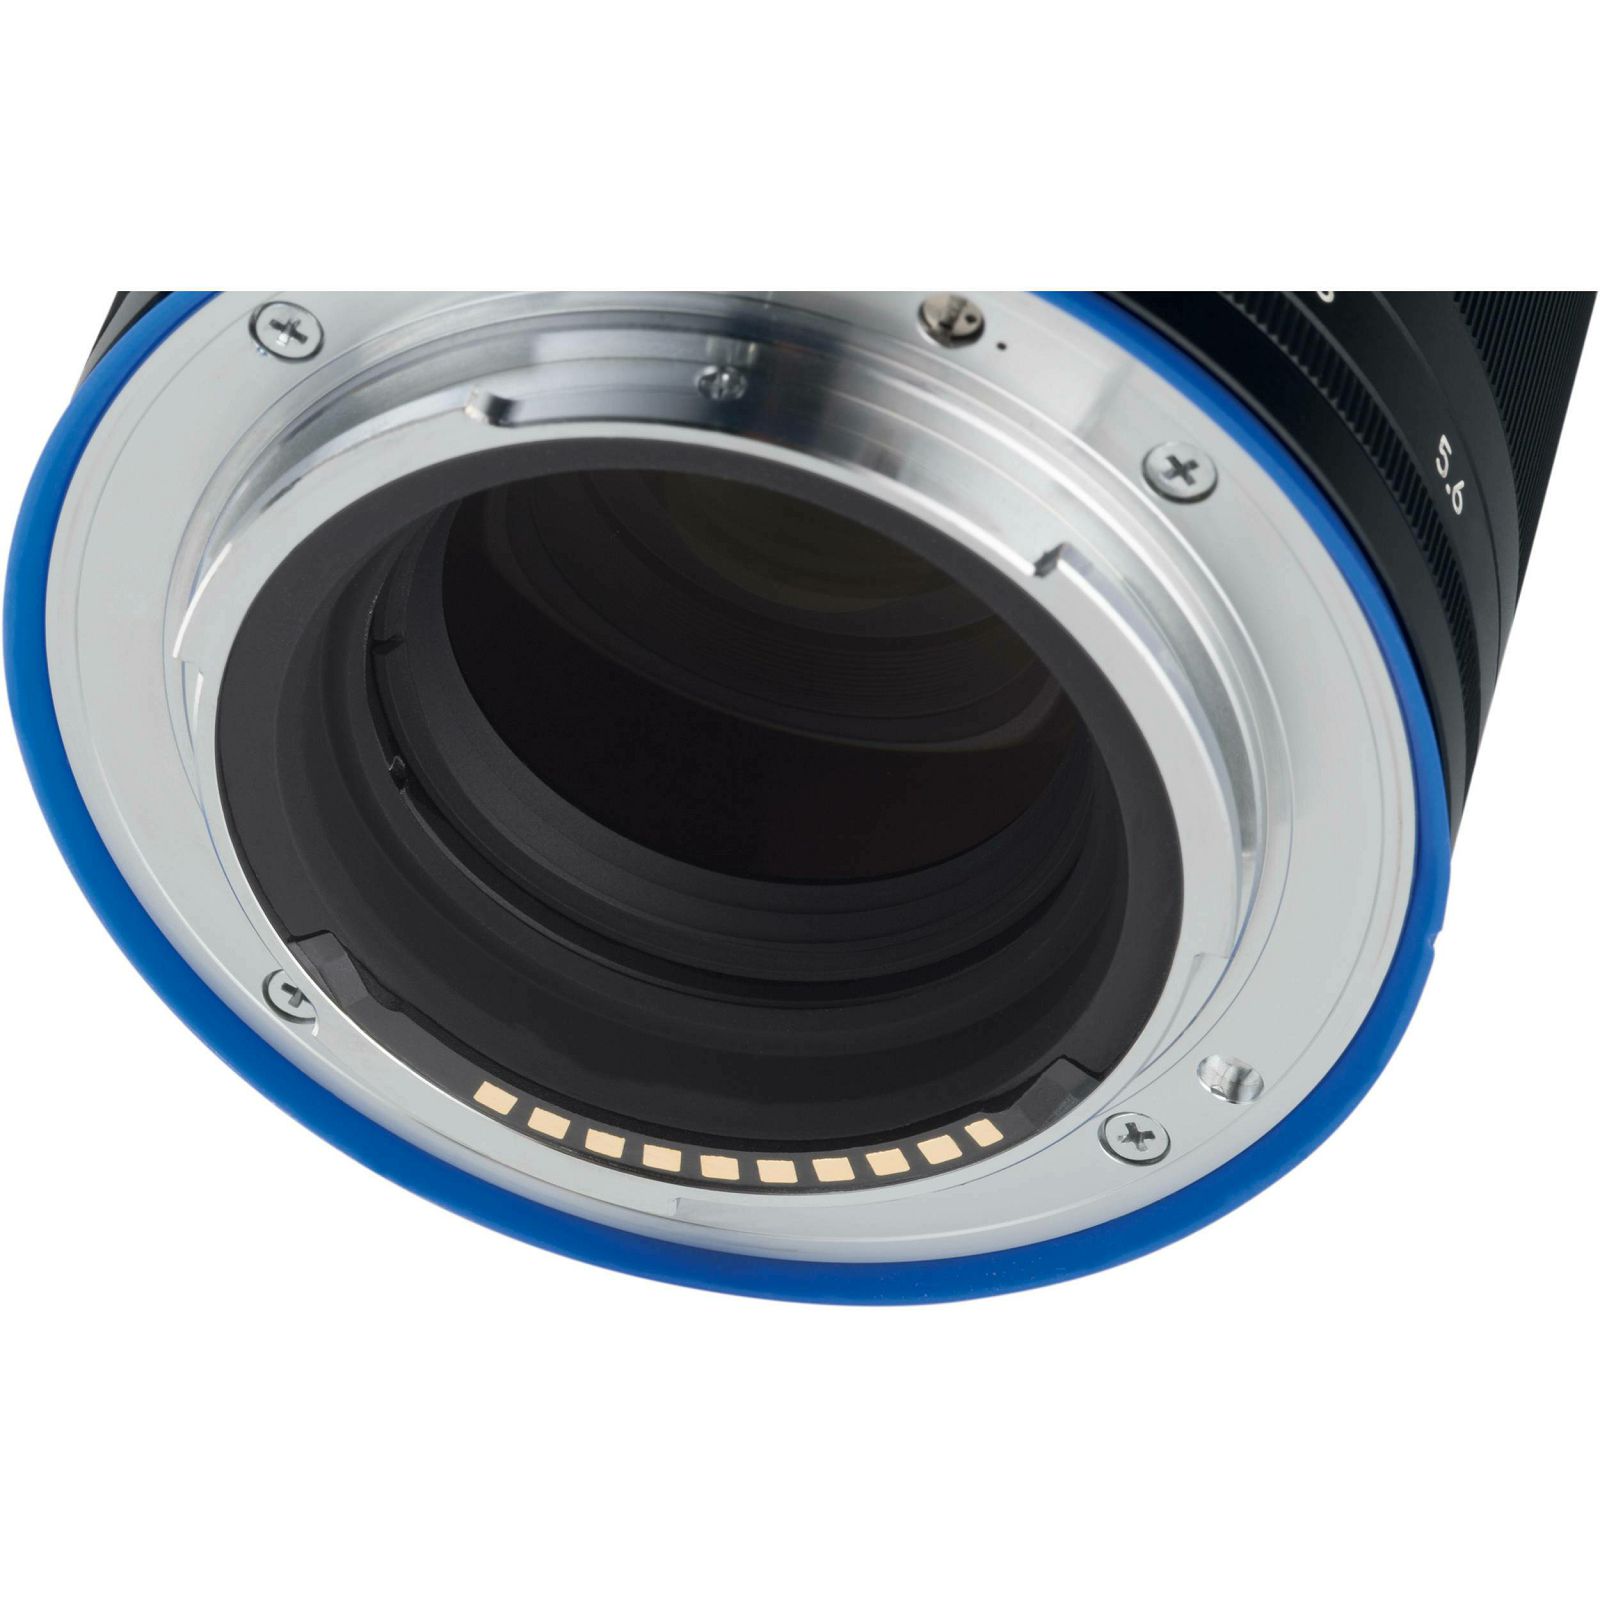 Zeiss Loxia 85mm f/2.4 FE portretni telefoto objektiv za Sony E-mount (2162-636)